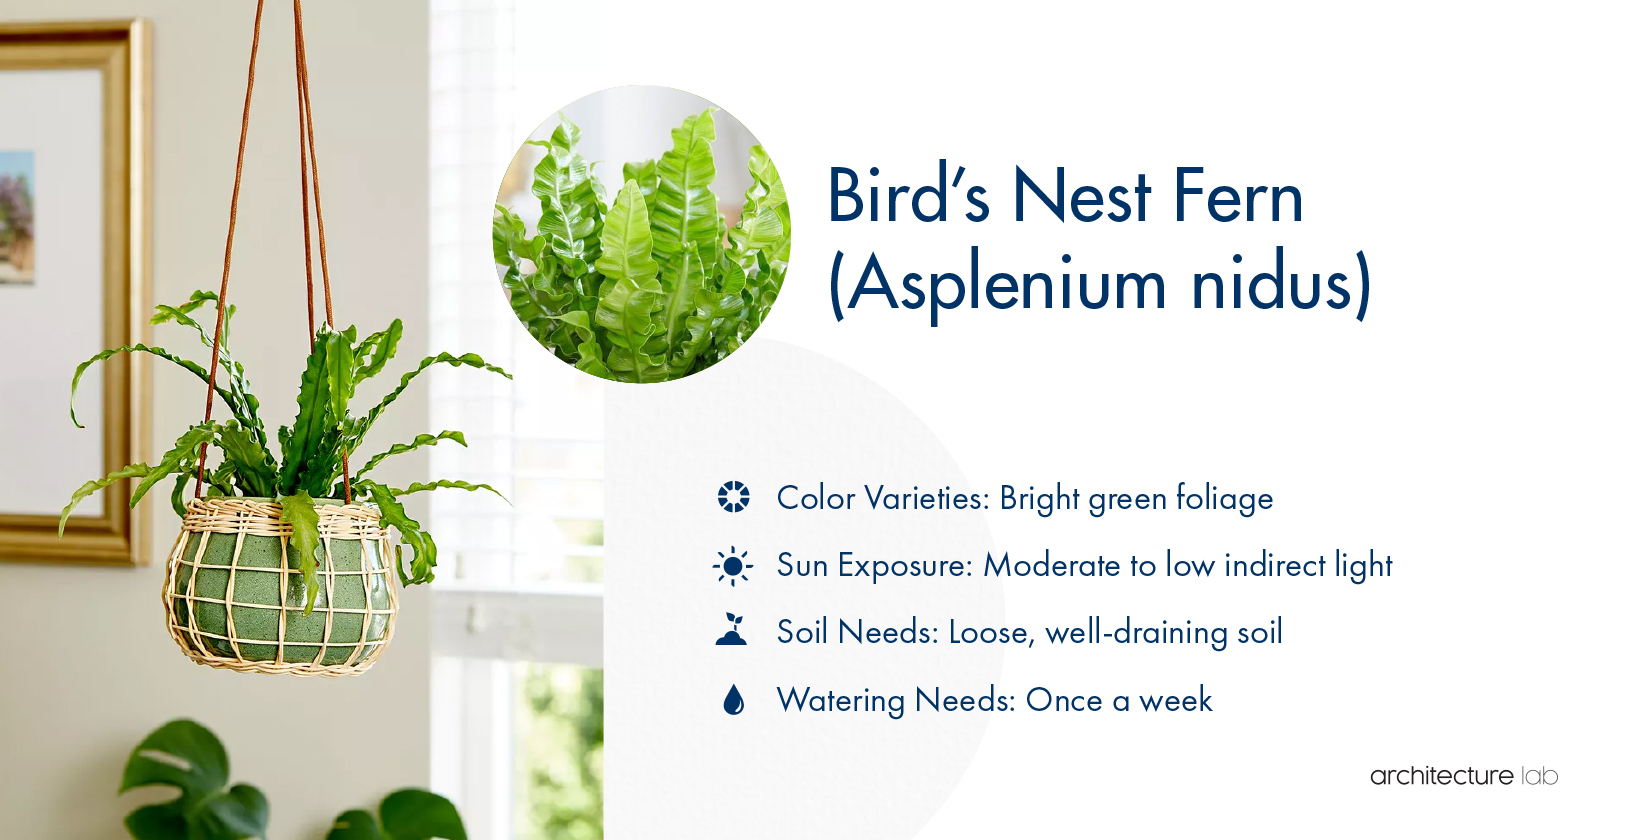 1. Bird's nest fern (asplenium nidus)